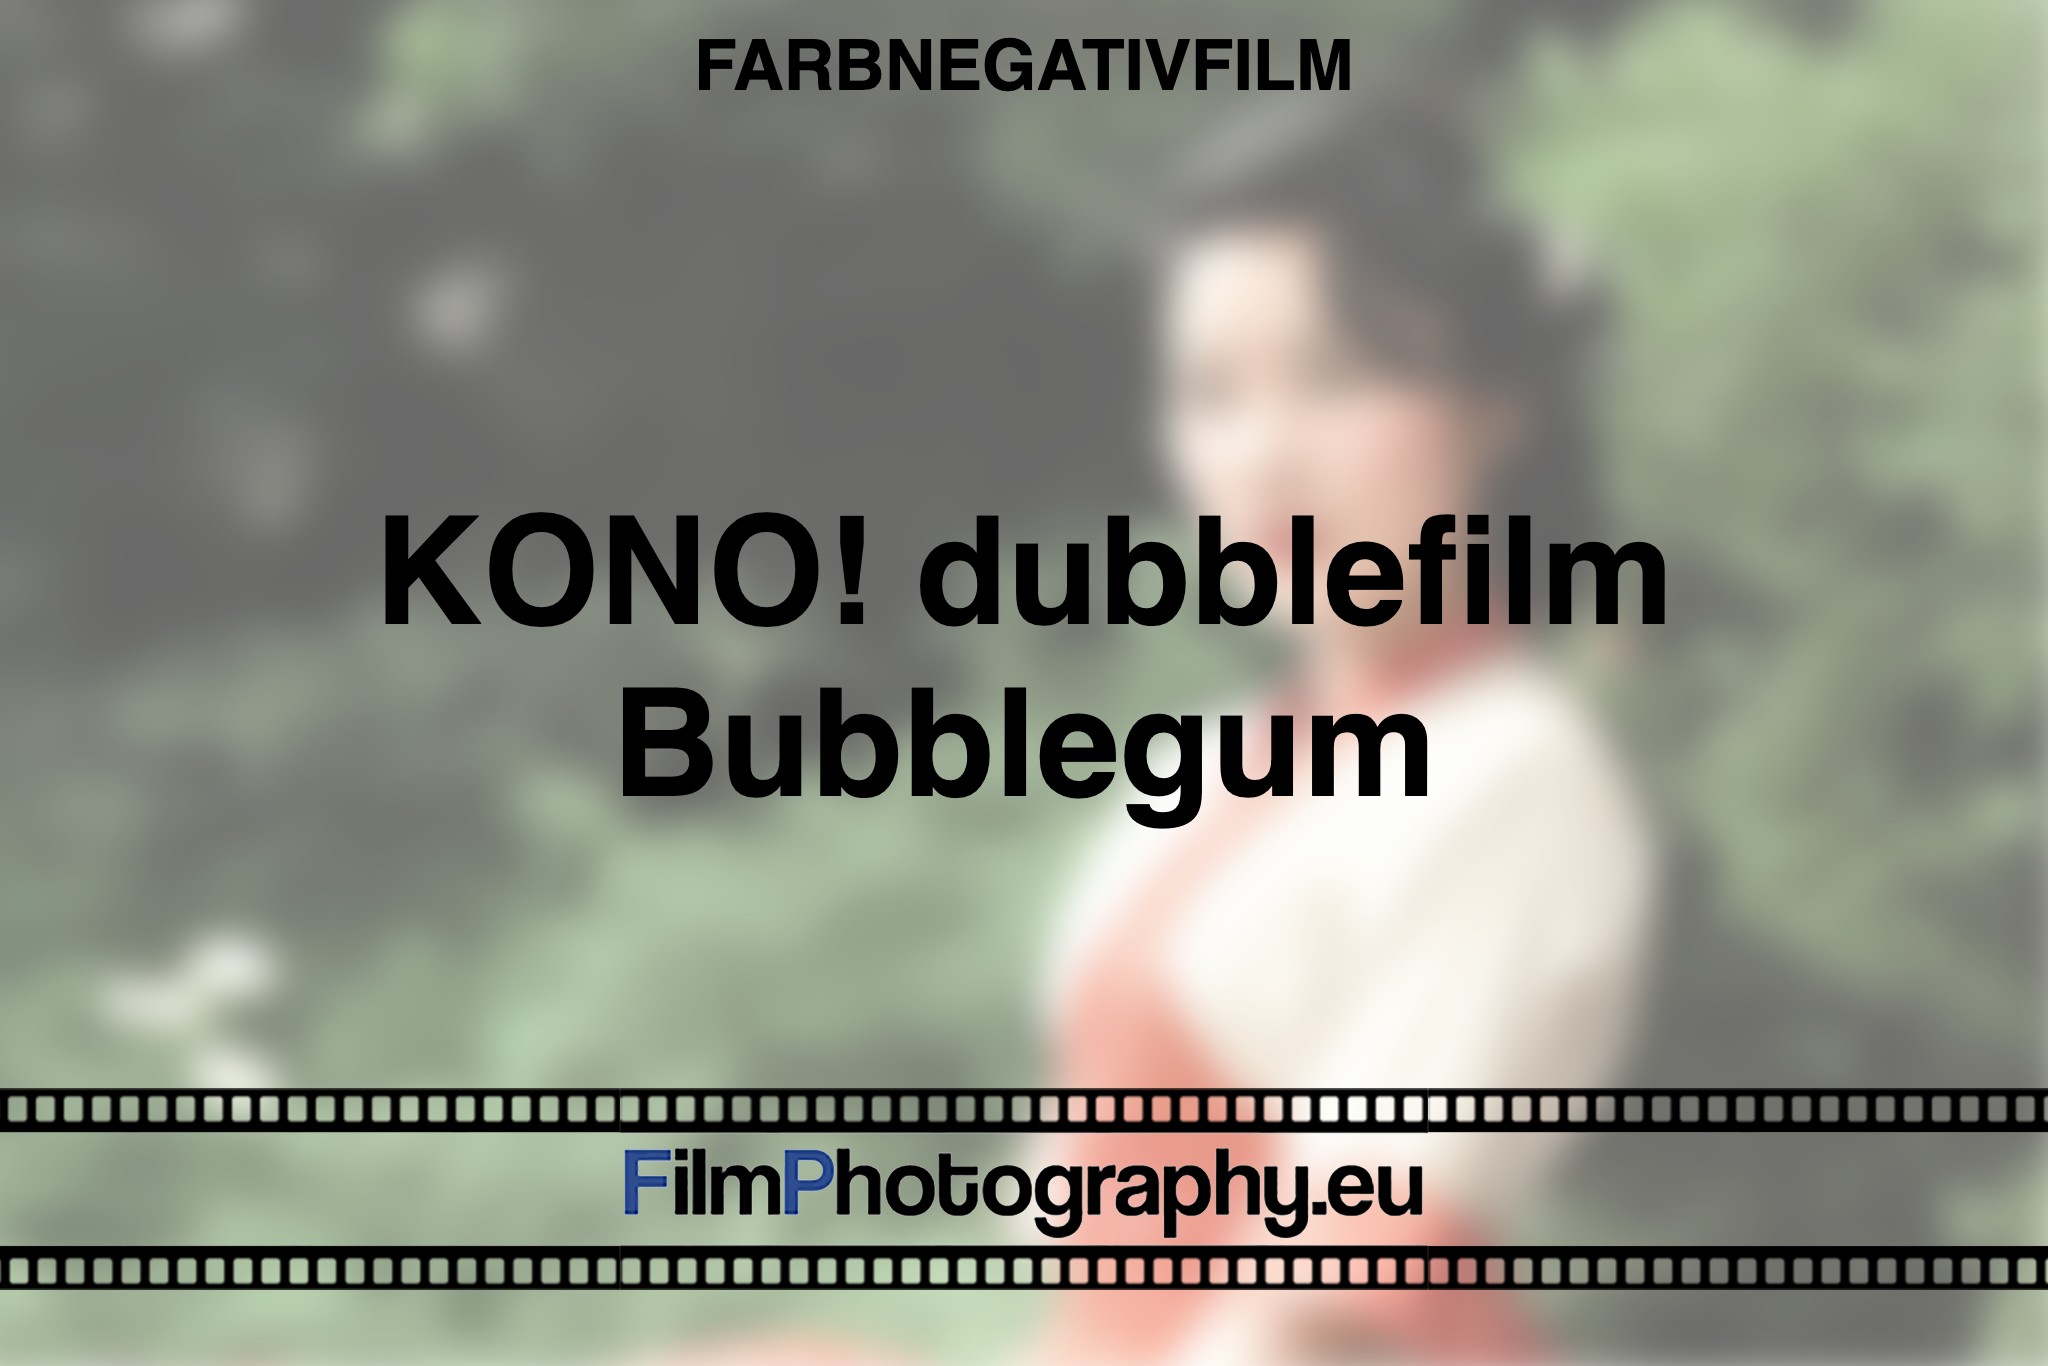 kono-dubblefilm-bubblegum-farbnegativfilm-bnv